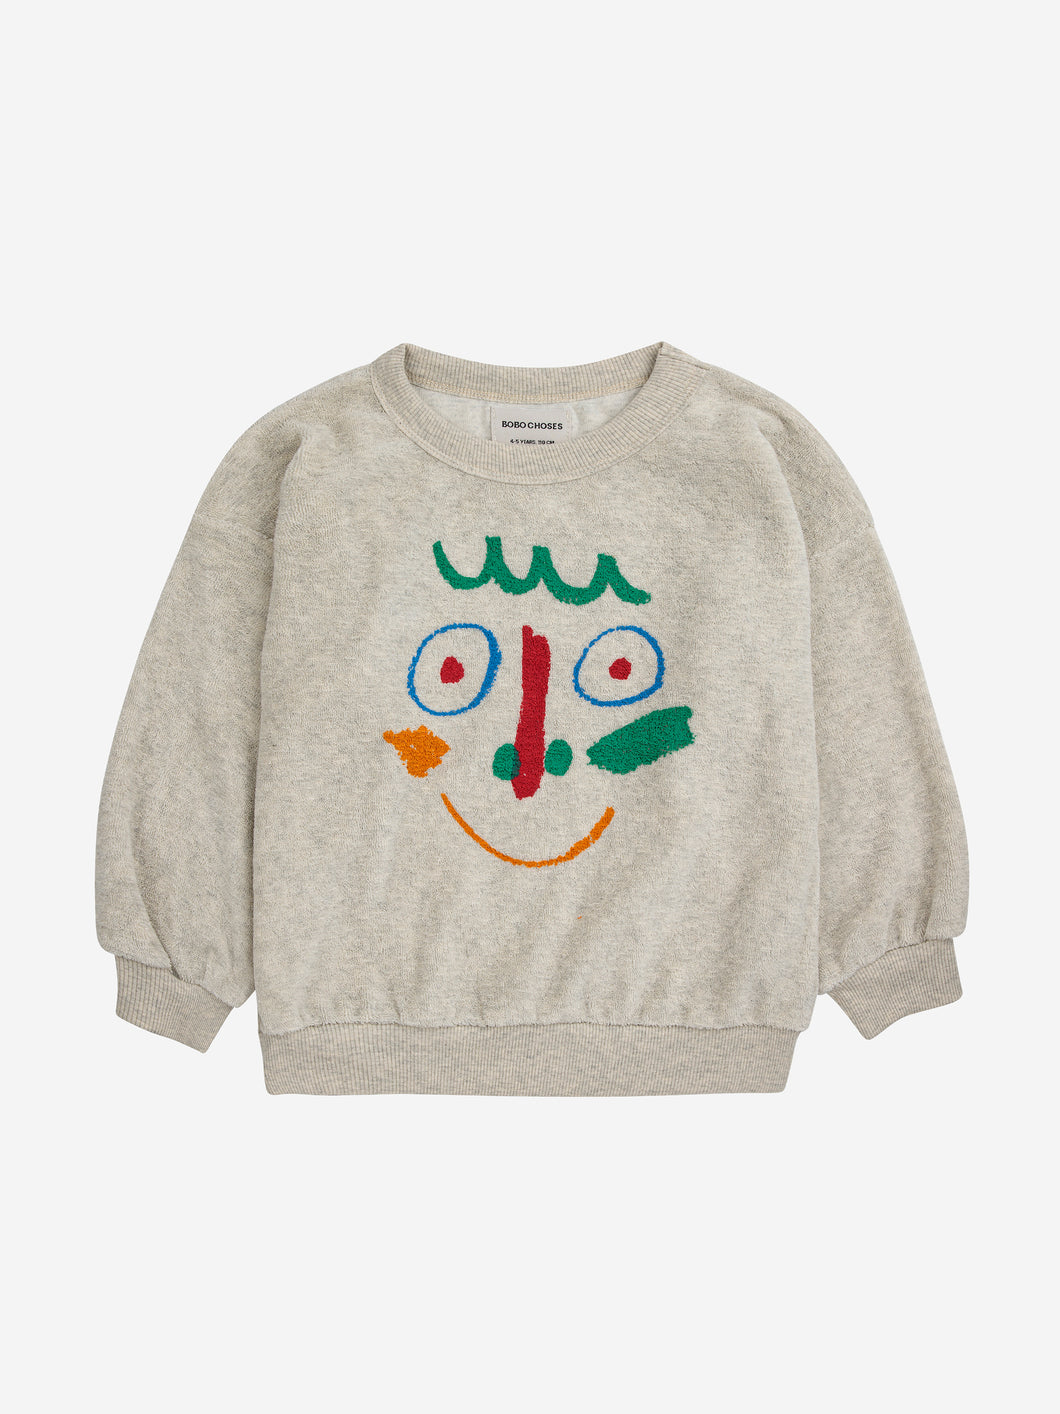 Bobo Choses / KID / Sweatshirt / Crazy Mask